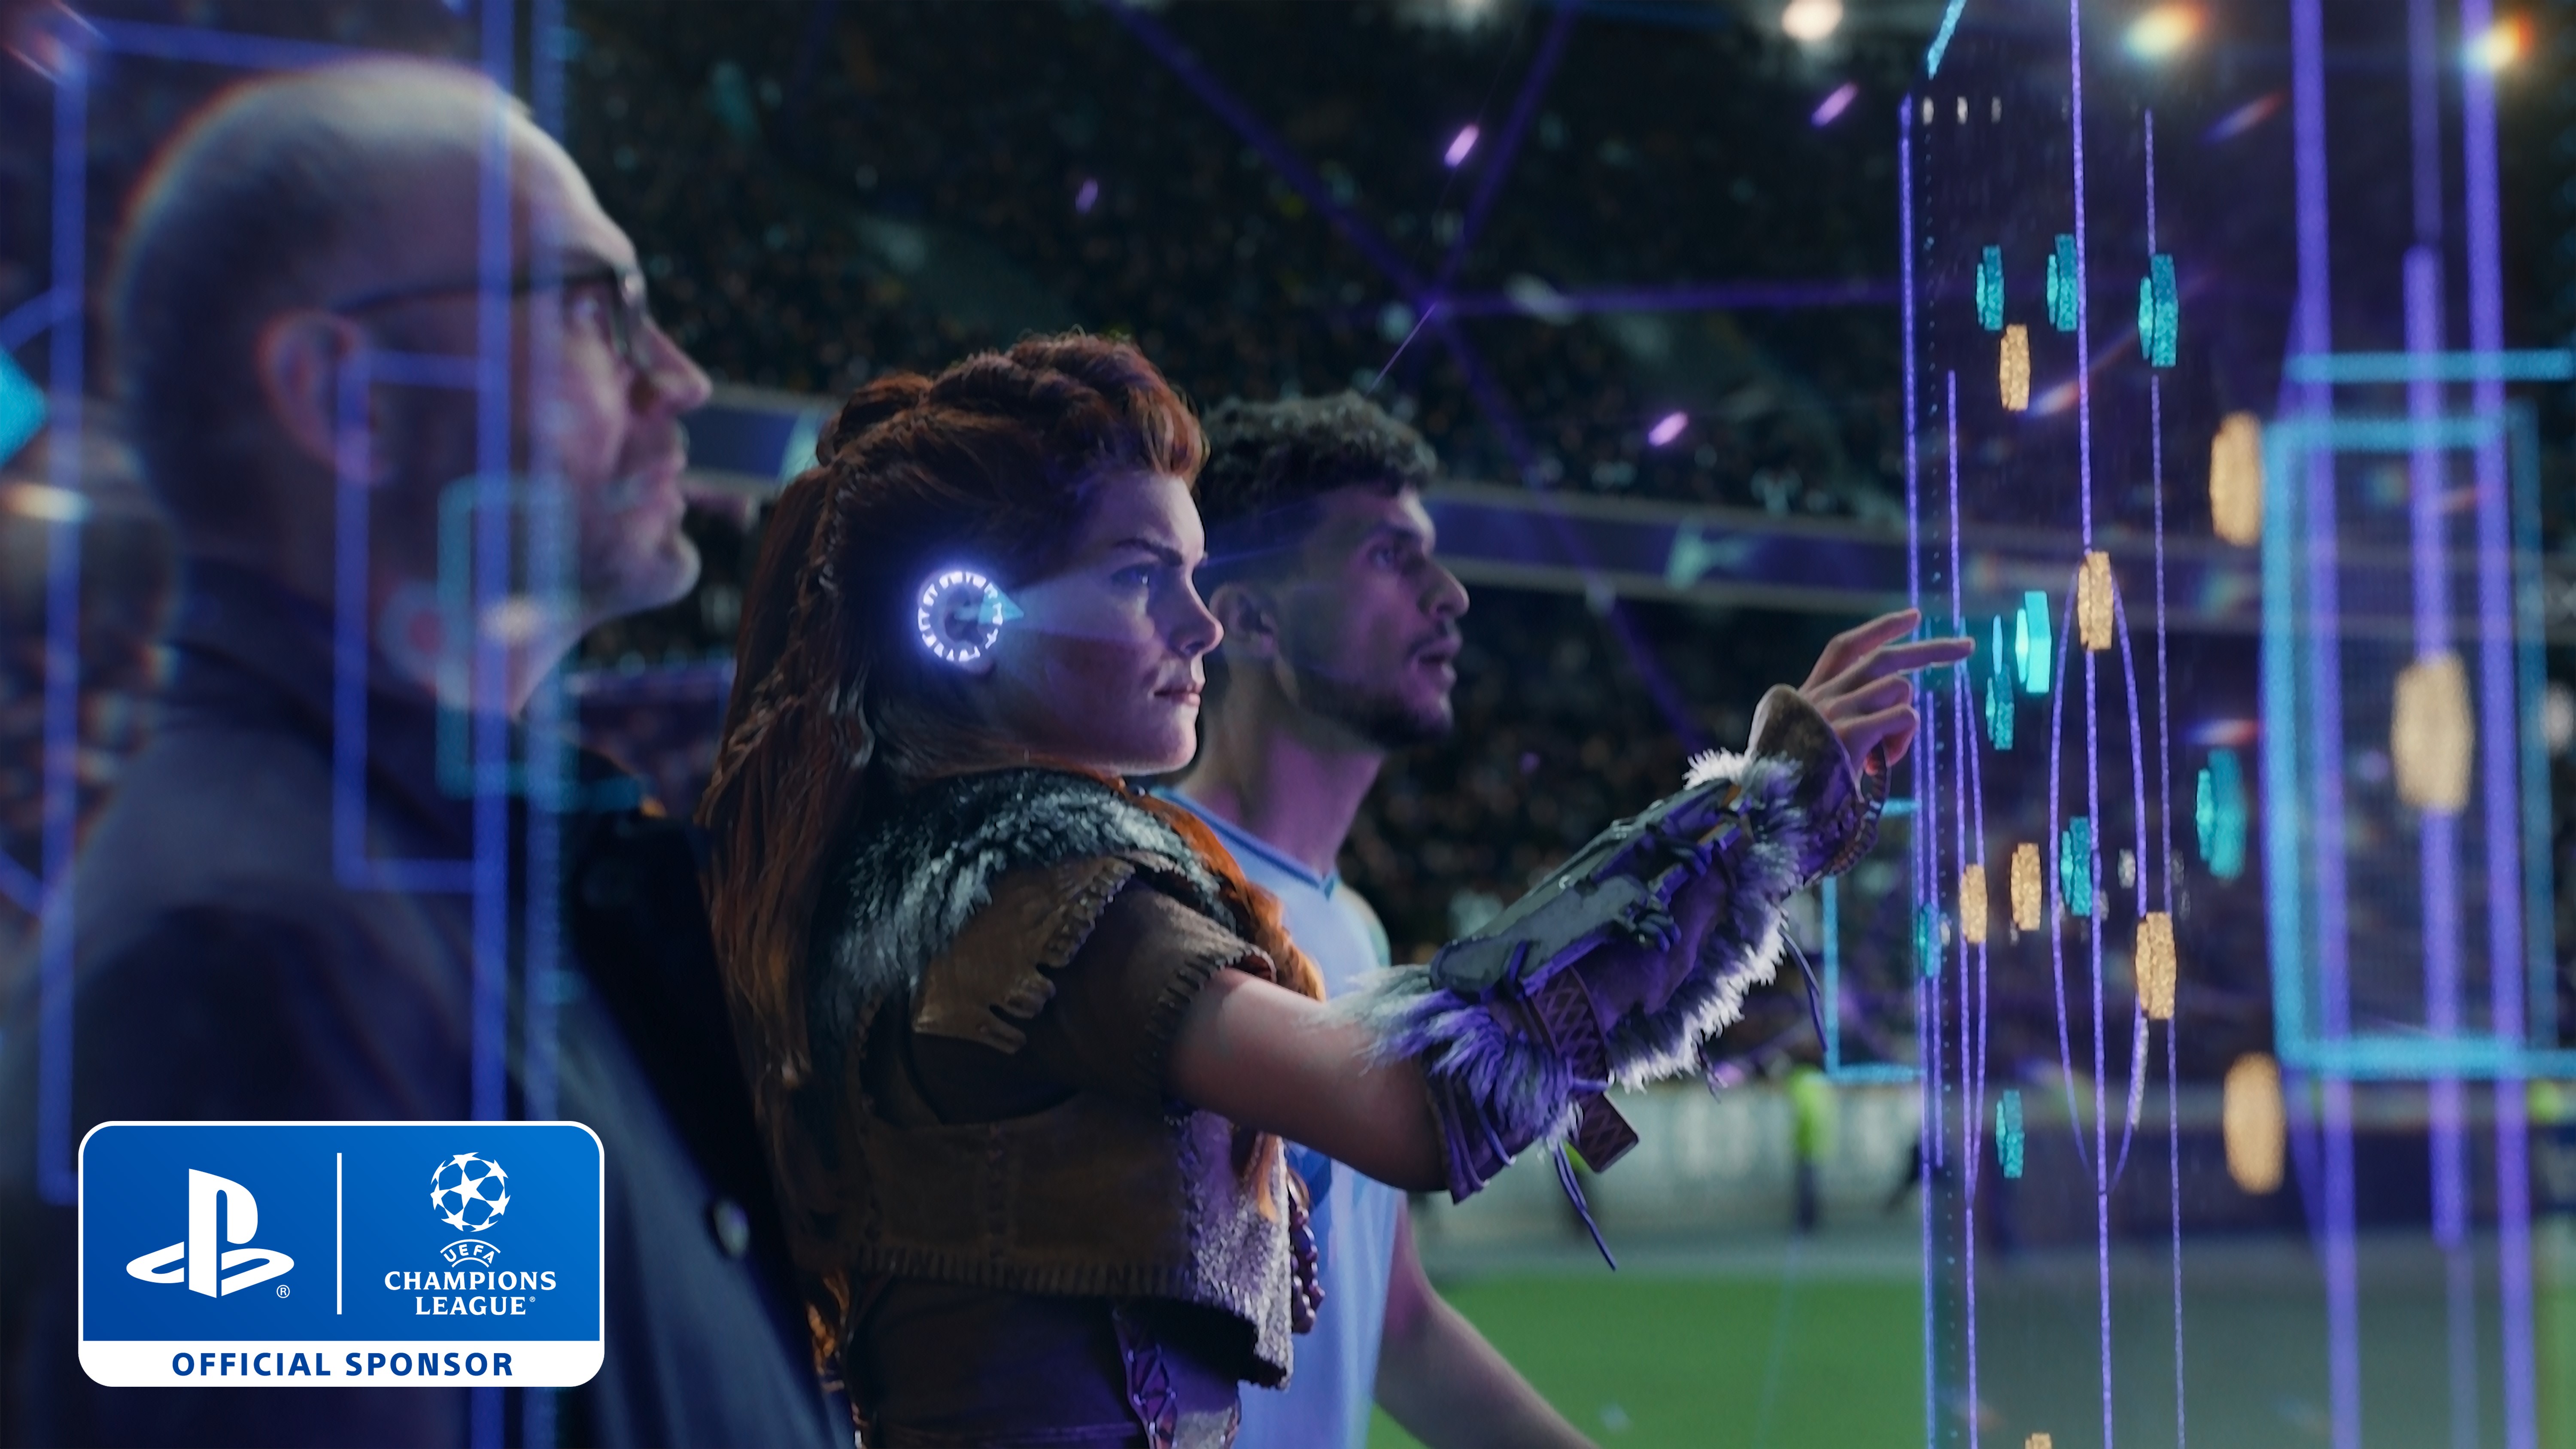 PlayStation ขนเหล่าตัวละครจากเกมดัง พร้อมเปิดตัวโฆษณาทีวีใหม่สุดครีเอทีฟในการแข่งขันฟุตบอล UEFA Champions League